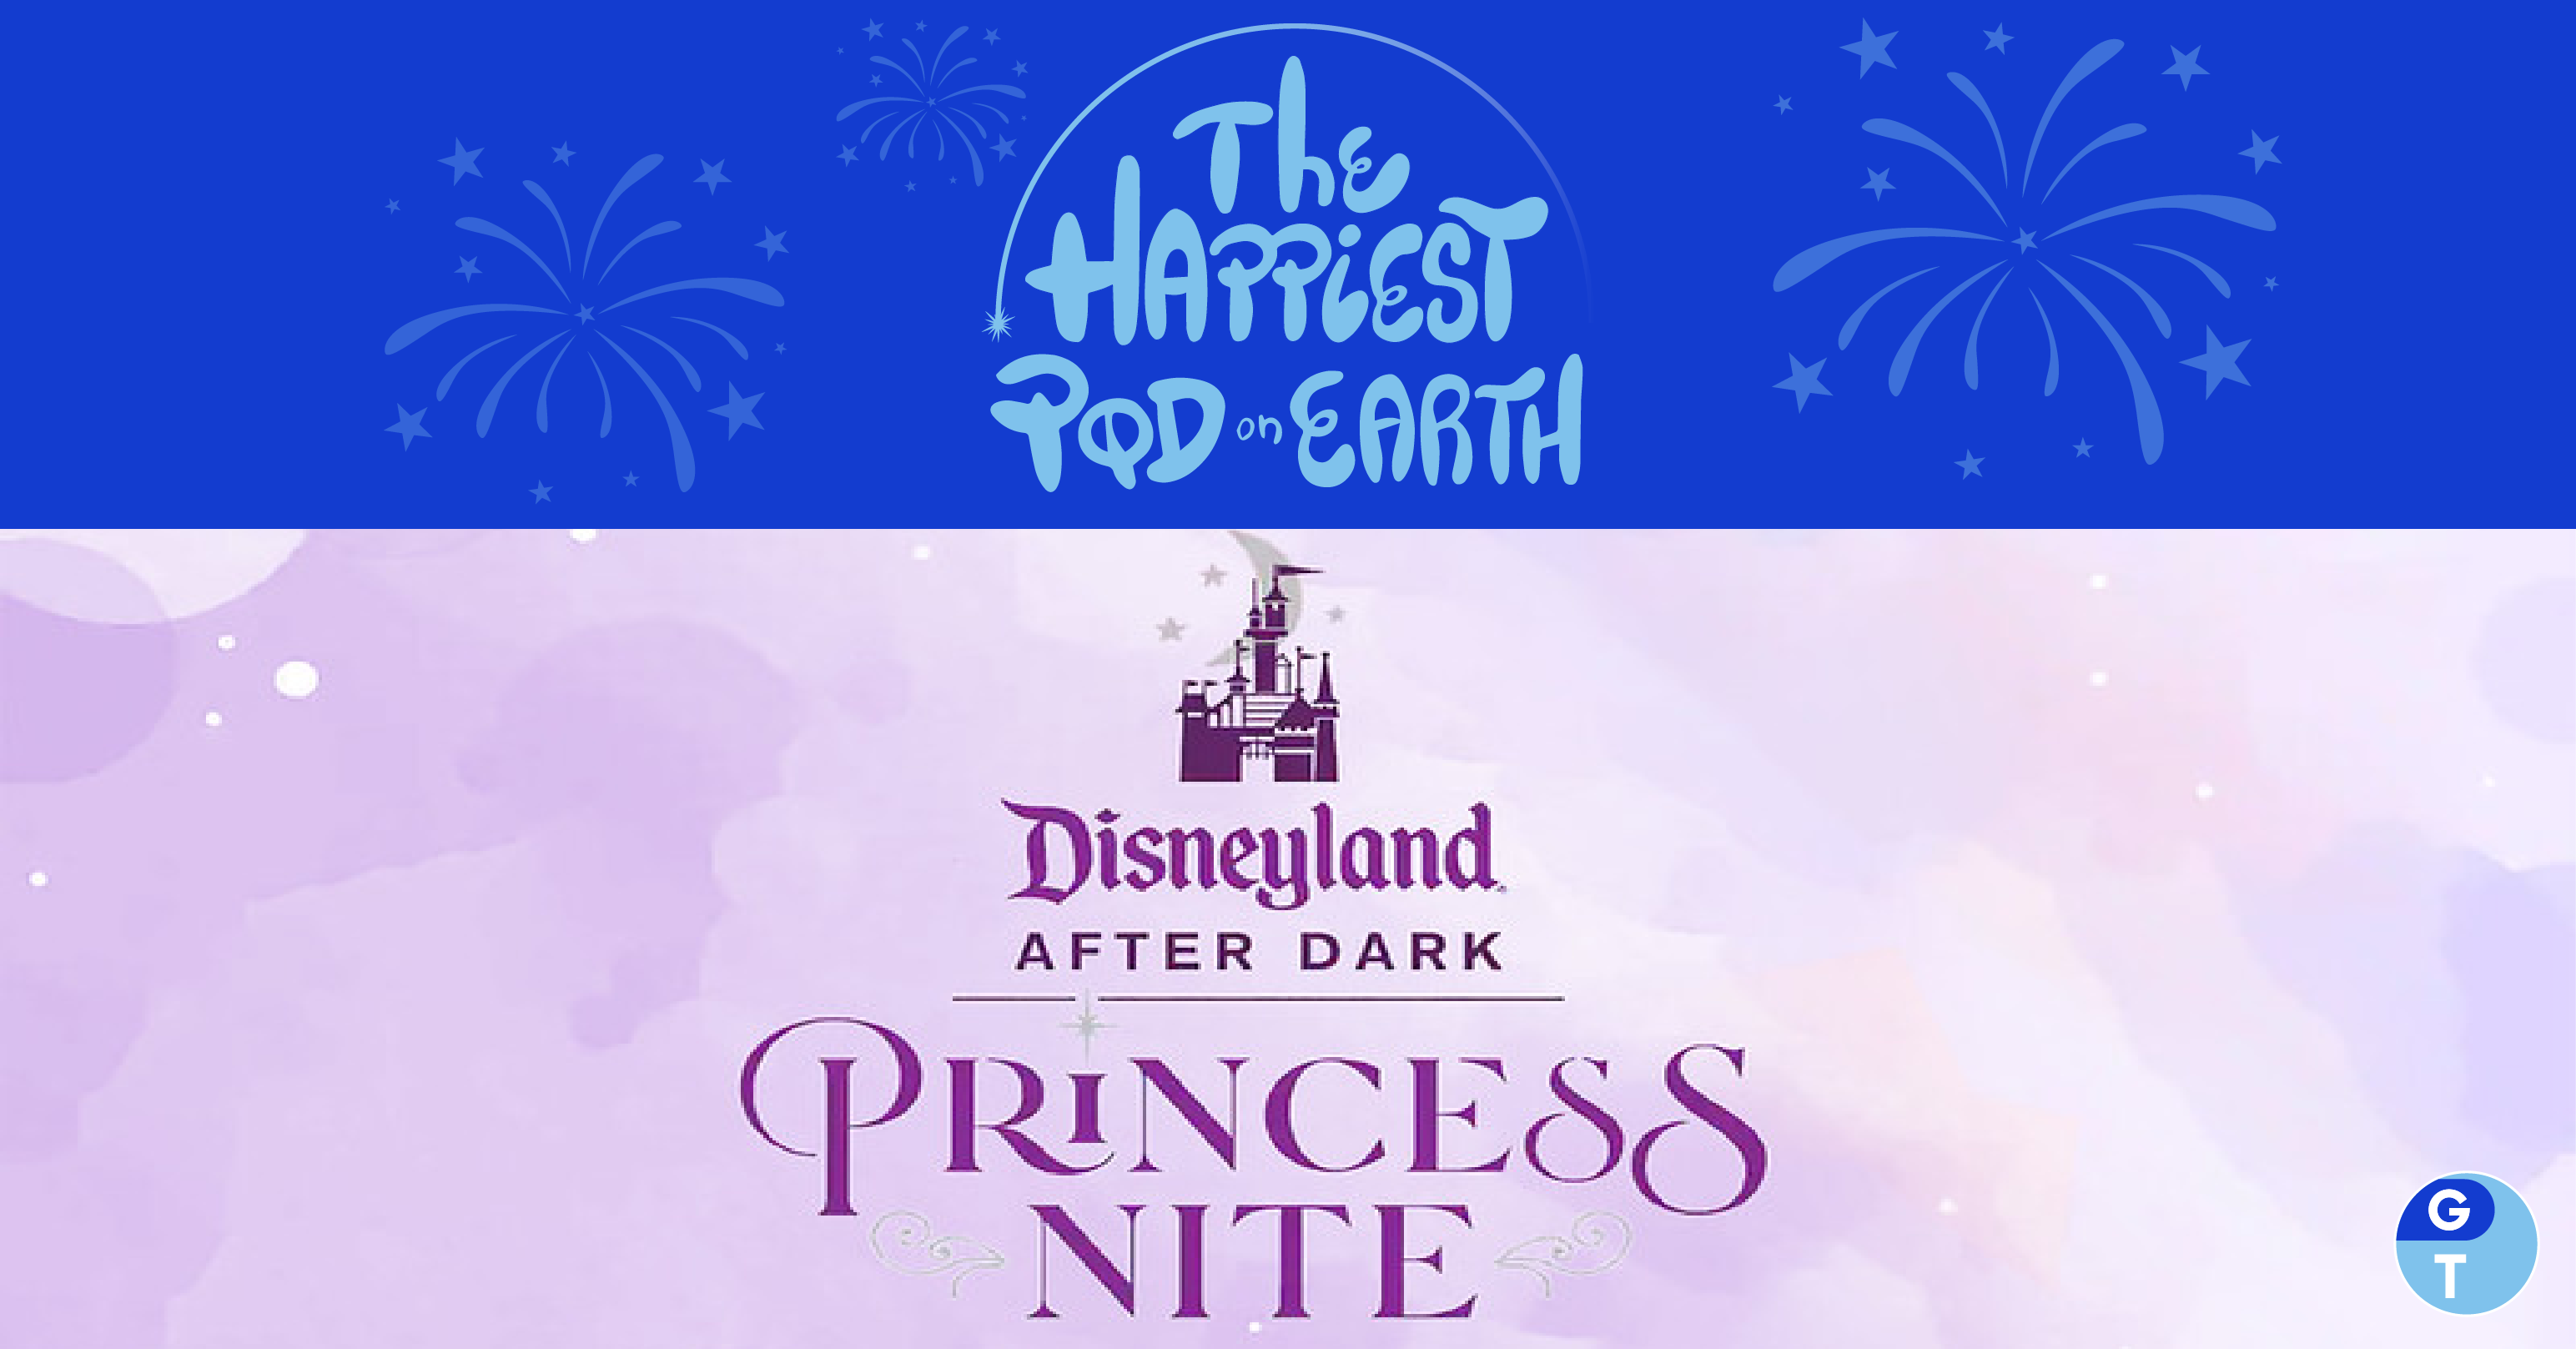 podcast logo of fireworks and podcast name "Disneyland After Dark Princess Nite"